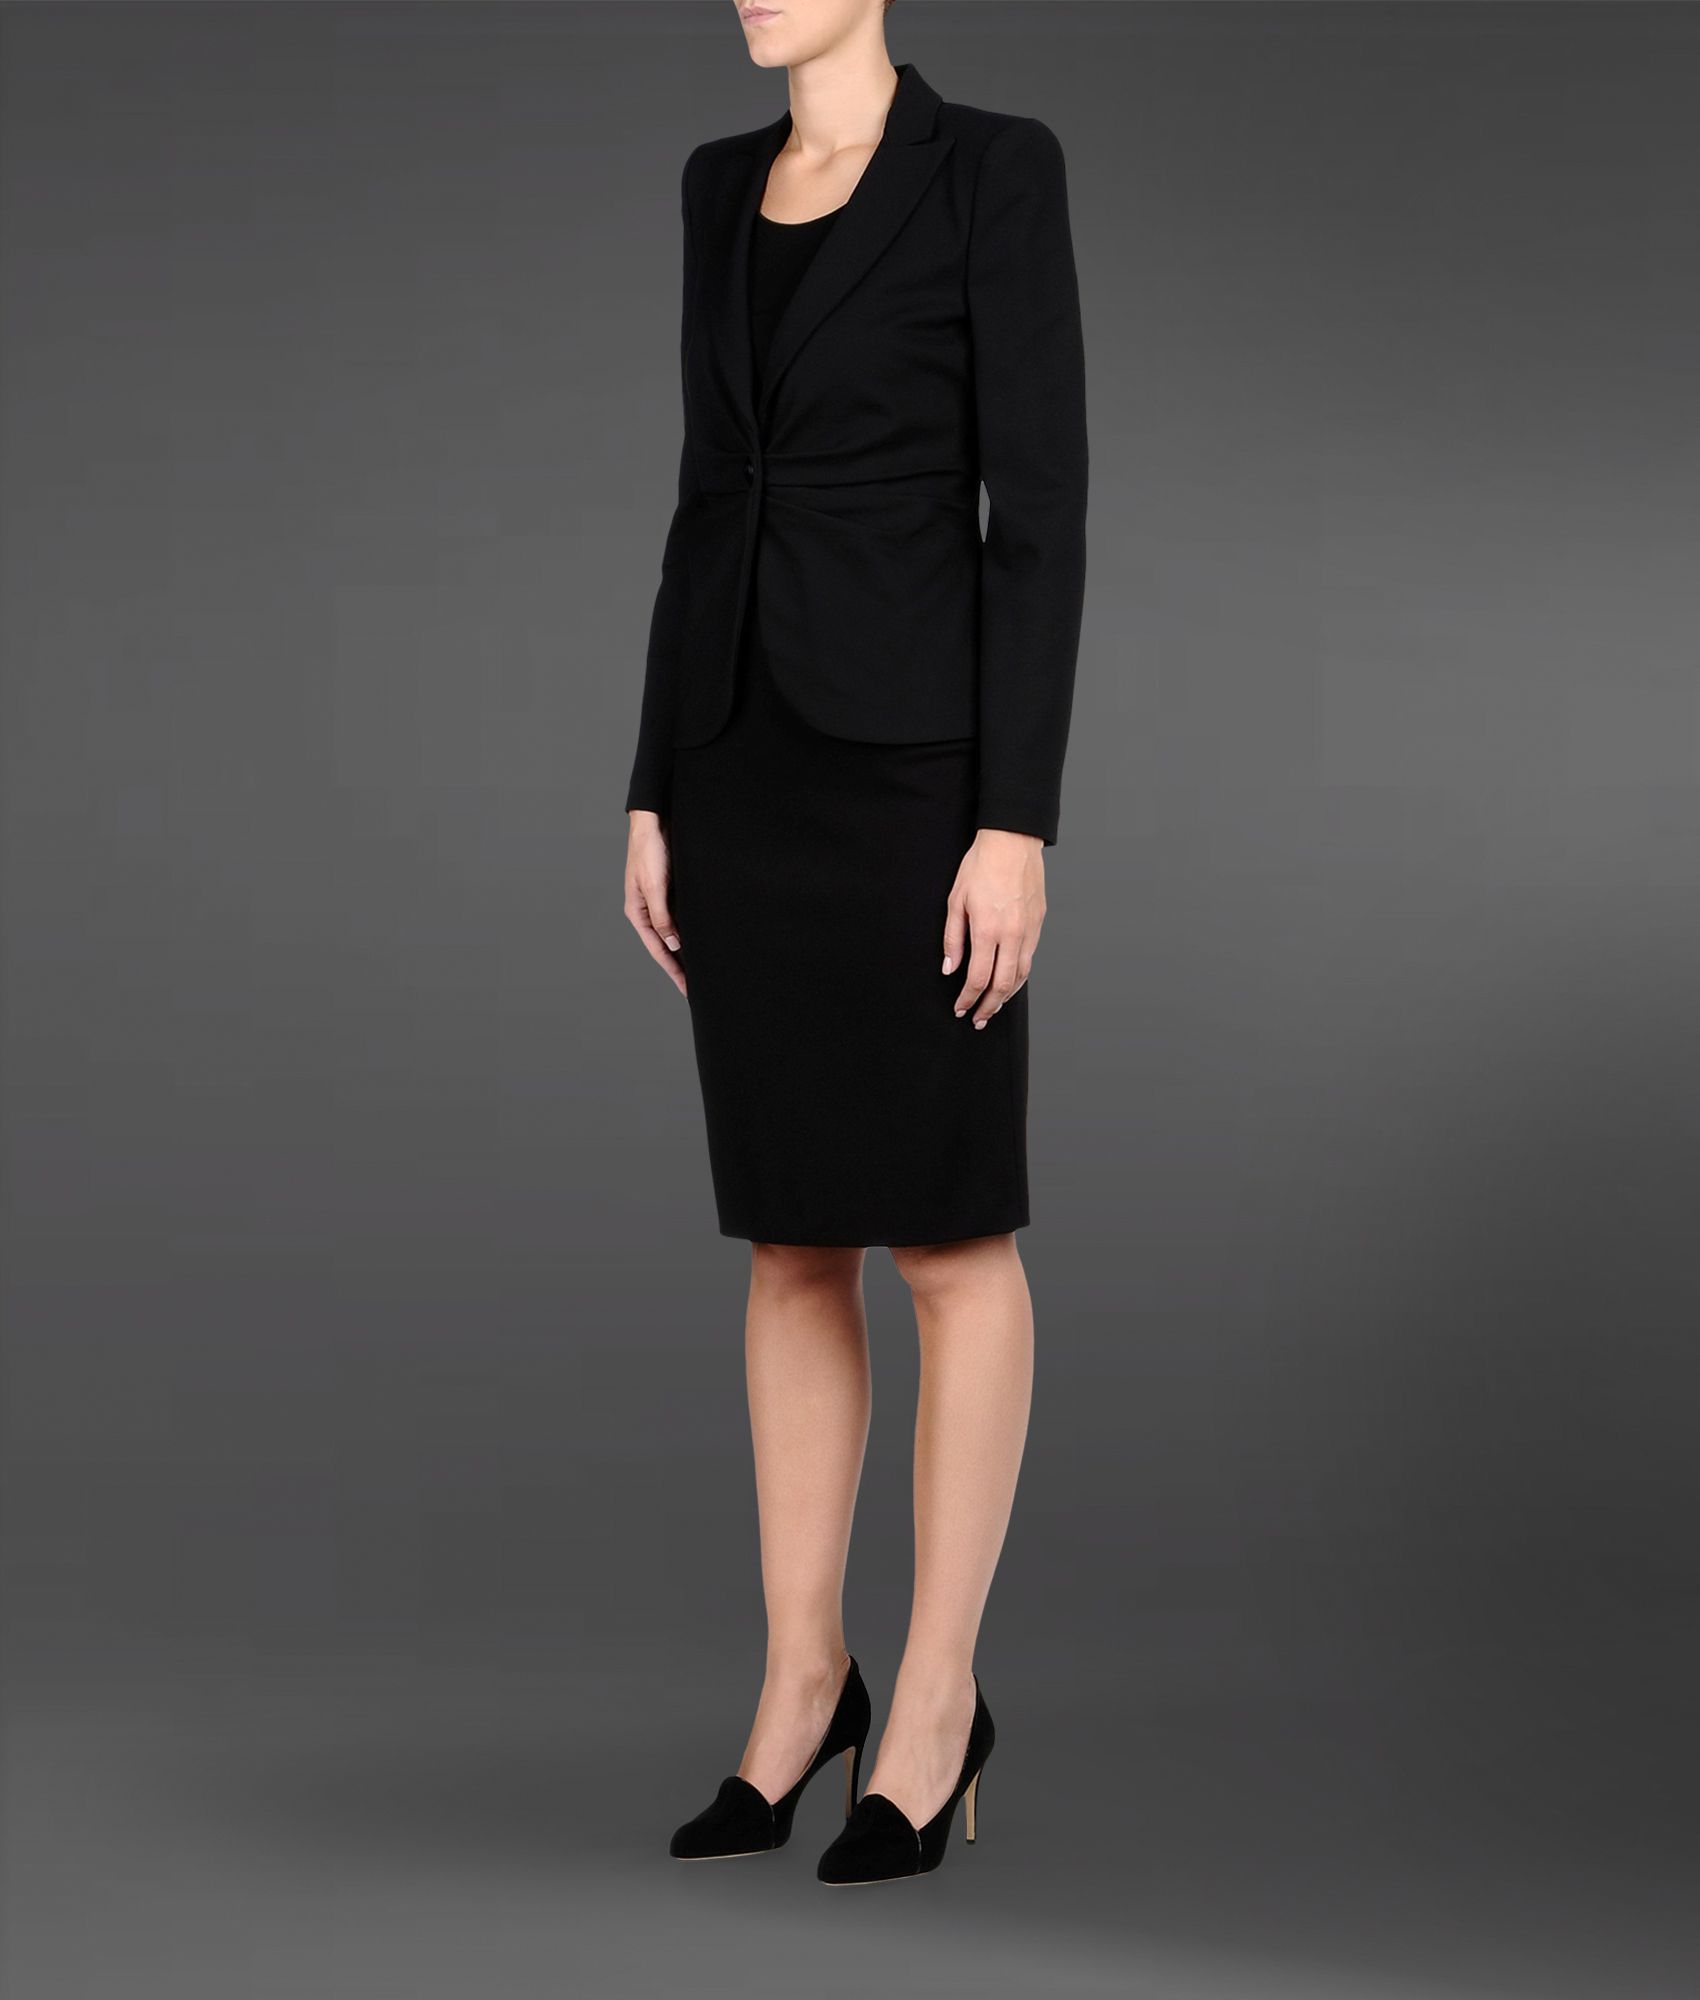 Lyst - Armani Womens Suit in Black